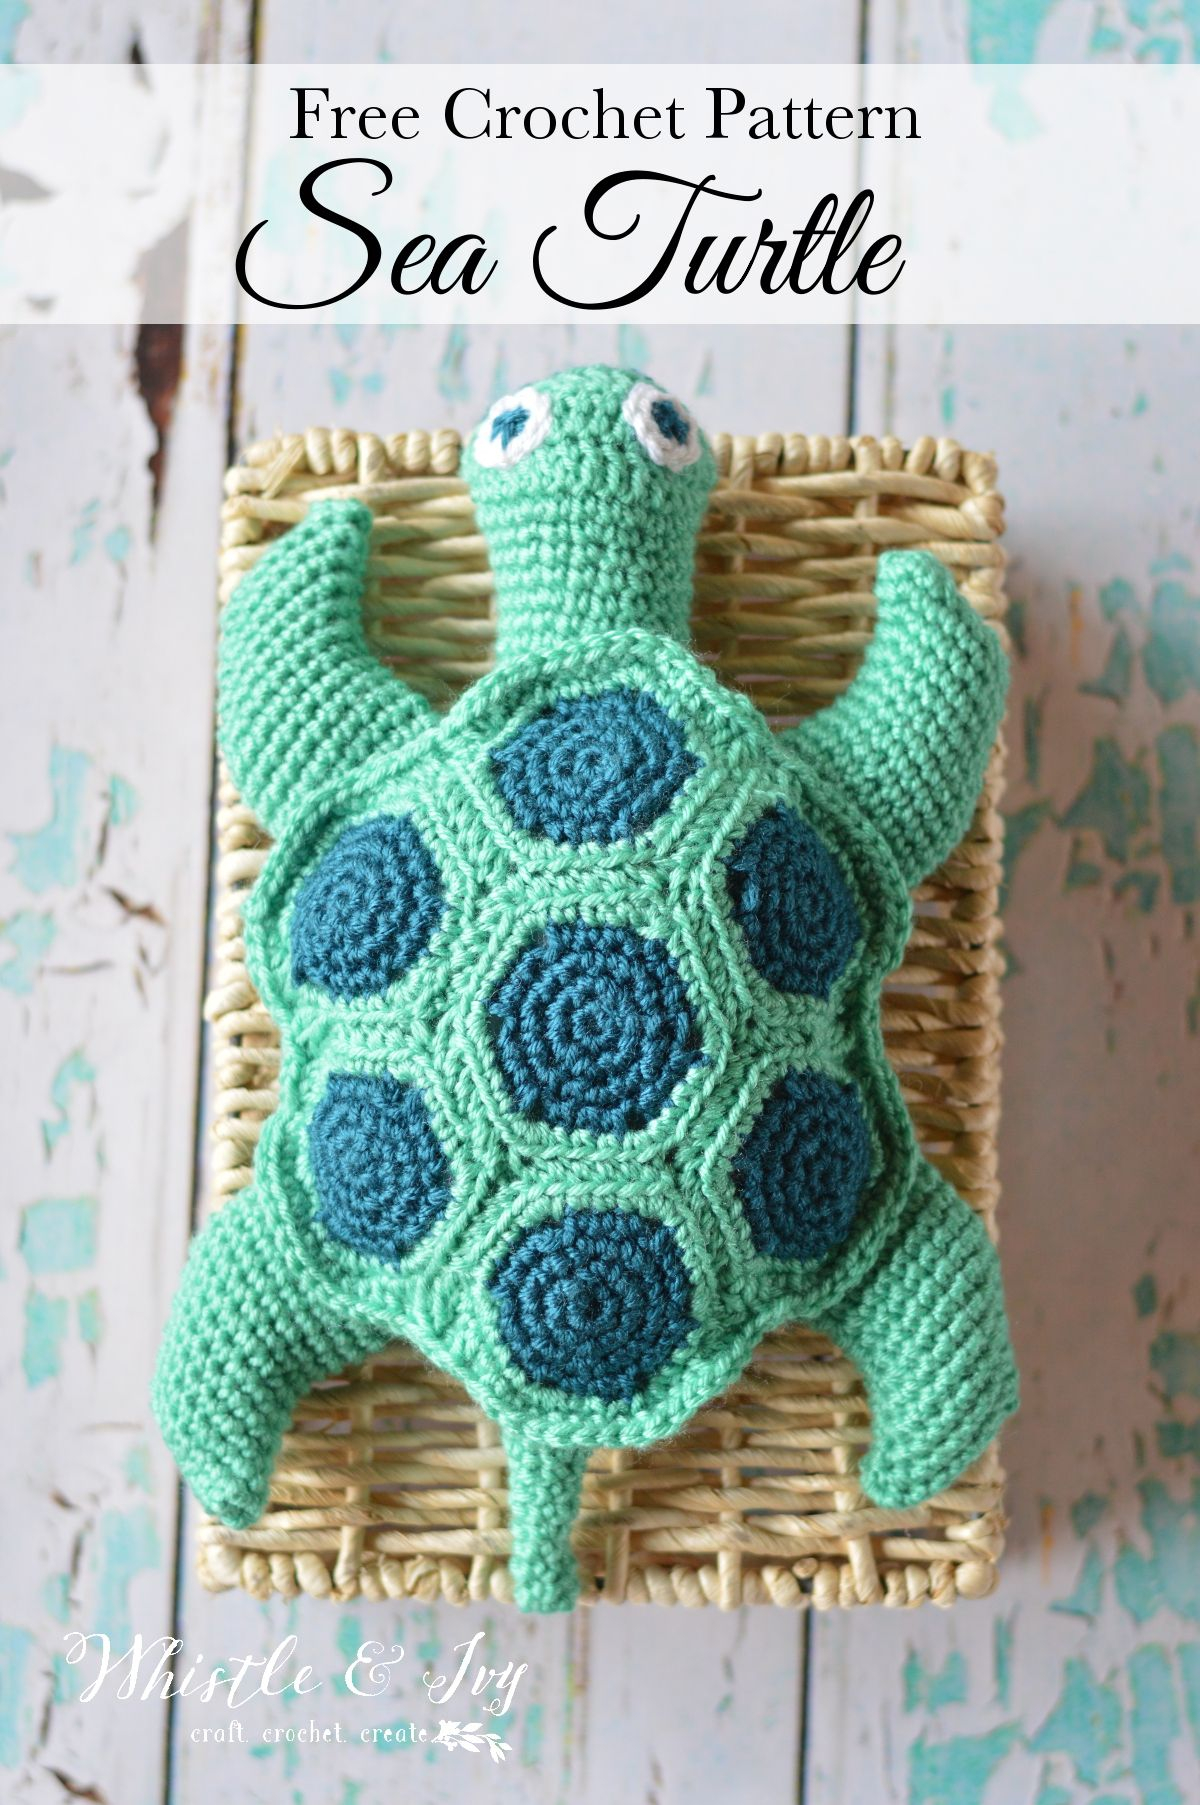 Free Crocheting Patterns Crochet Sea Turtle Crochet Pinterest Crochet Patterns Crochet